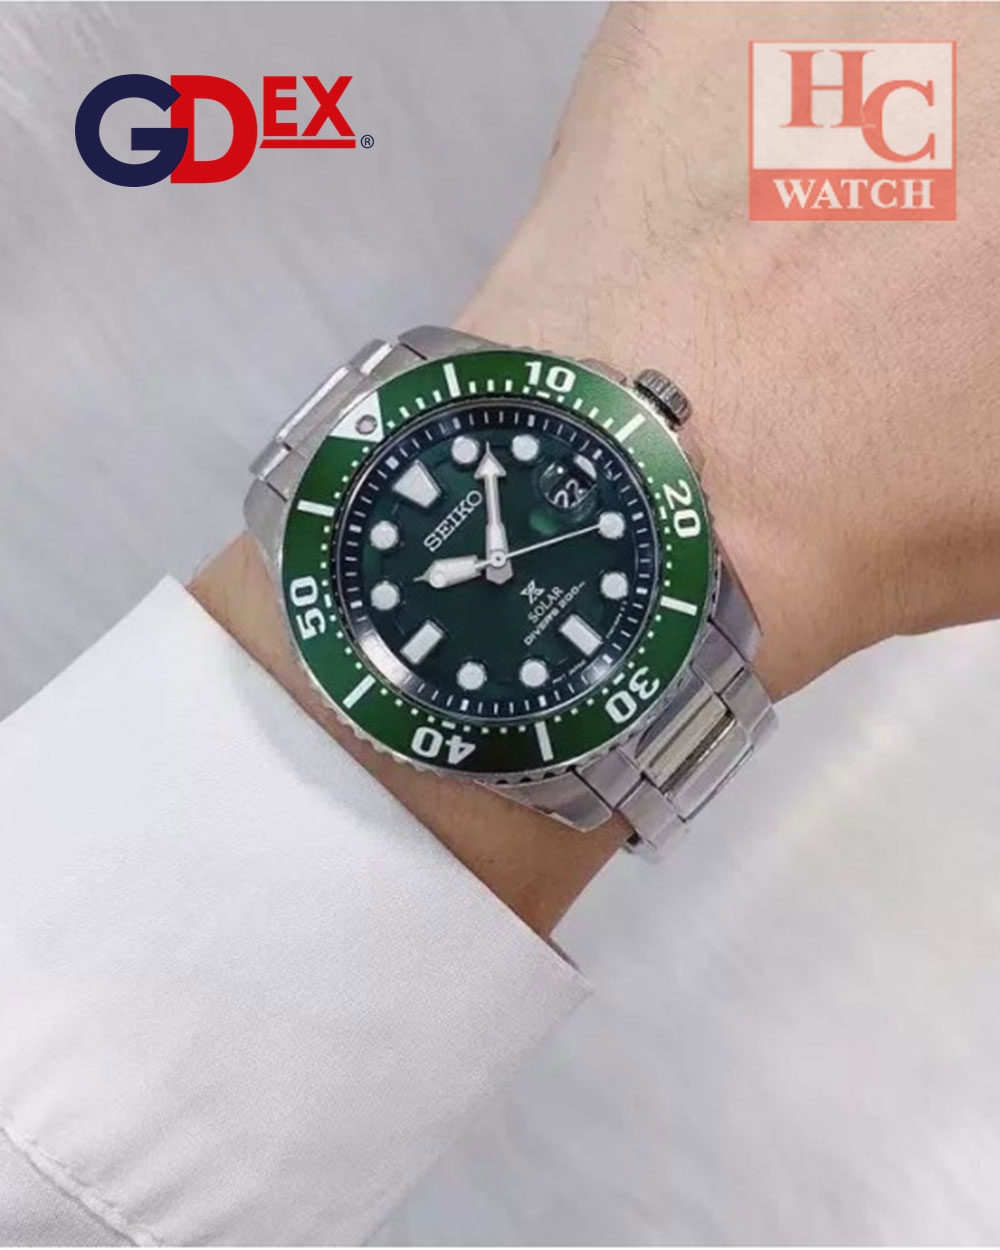 SEIKO SNE579P1 Prospex Solar Diver Asia Exclusive Green Dial Watch